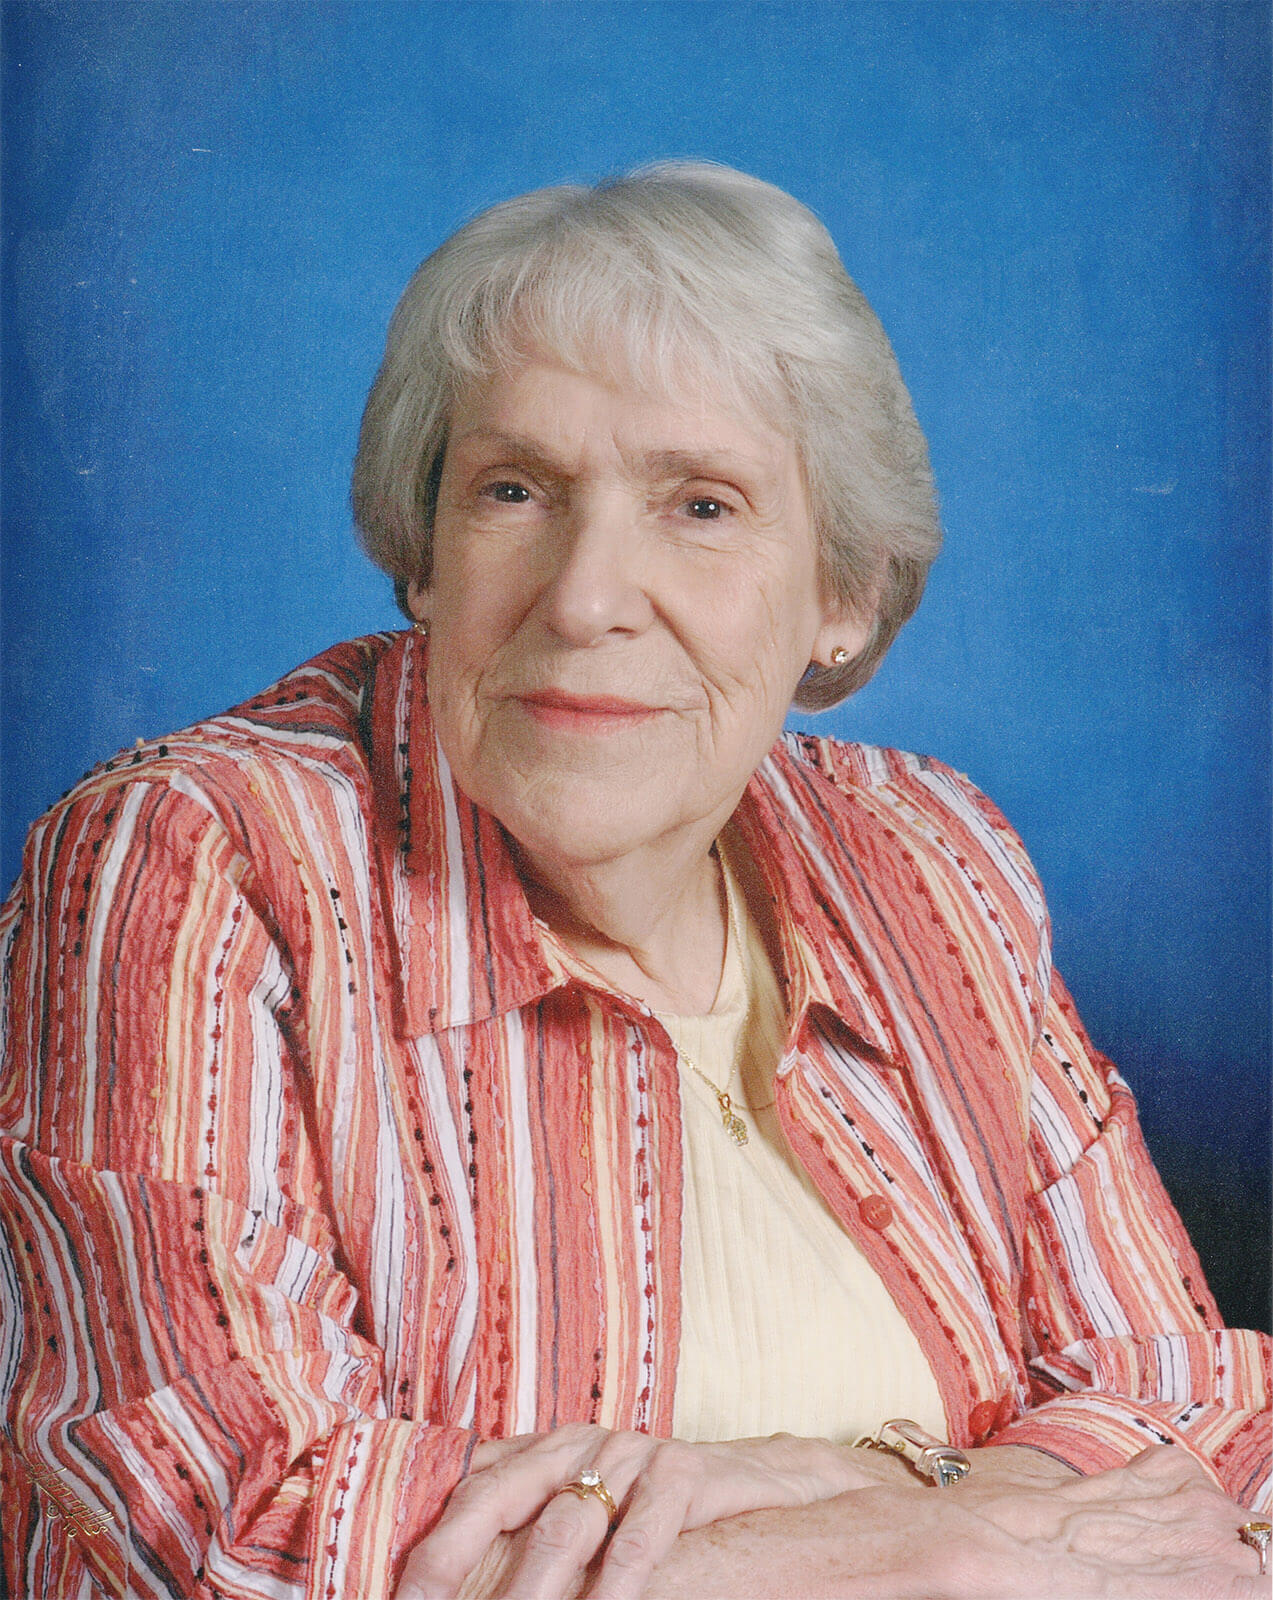 Obituaries - H. Virginia Wittman